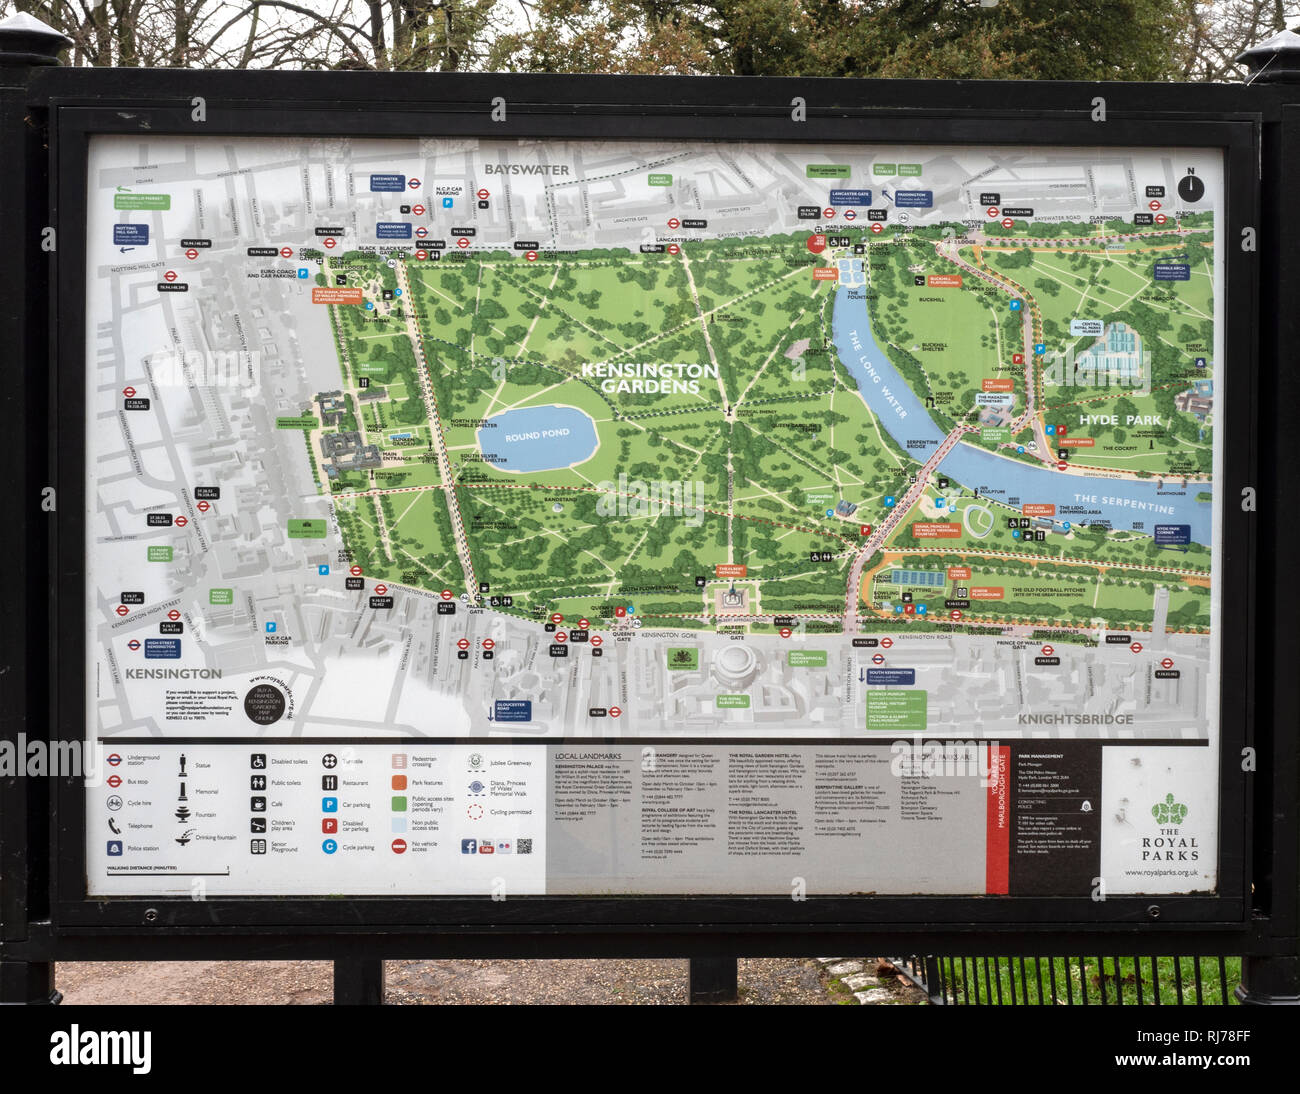 Map And Information Board At Kensington Gardens Kensington London England Uk RJ78FF 